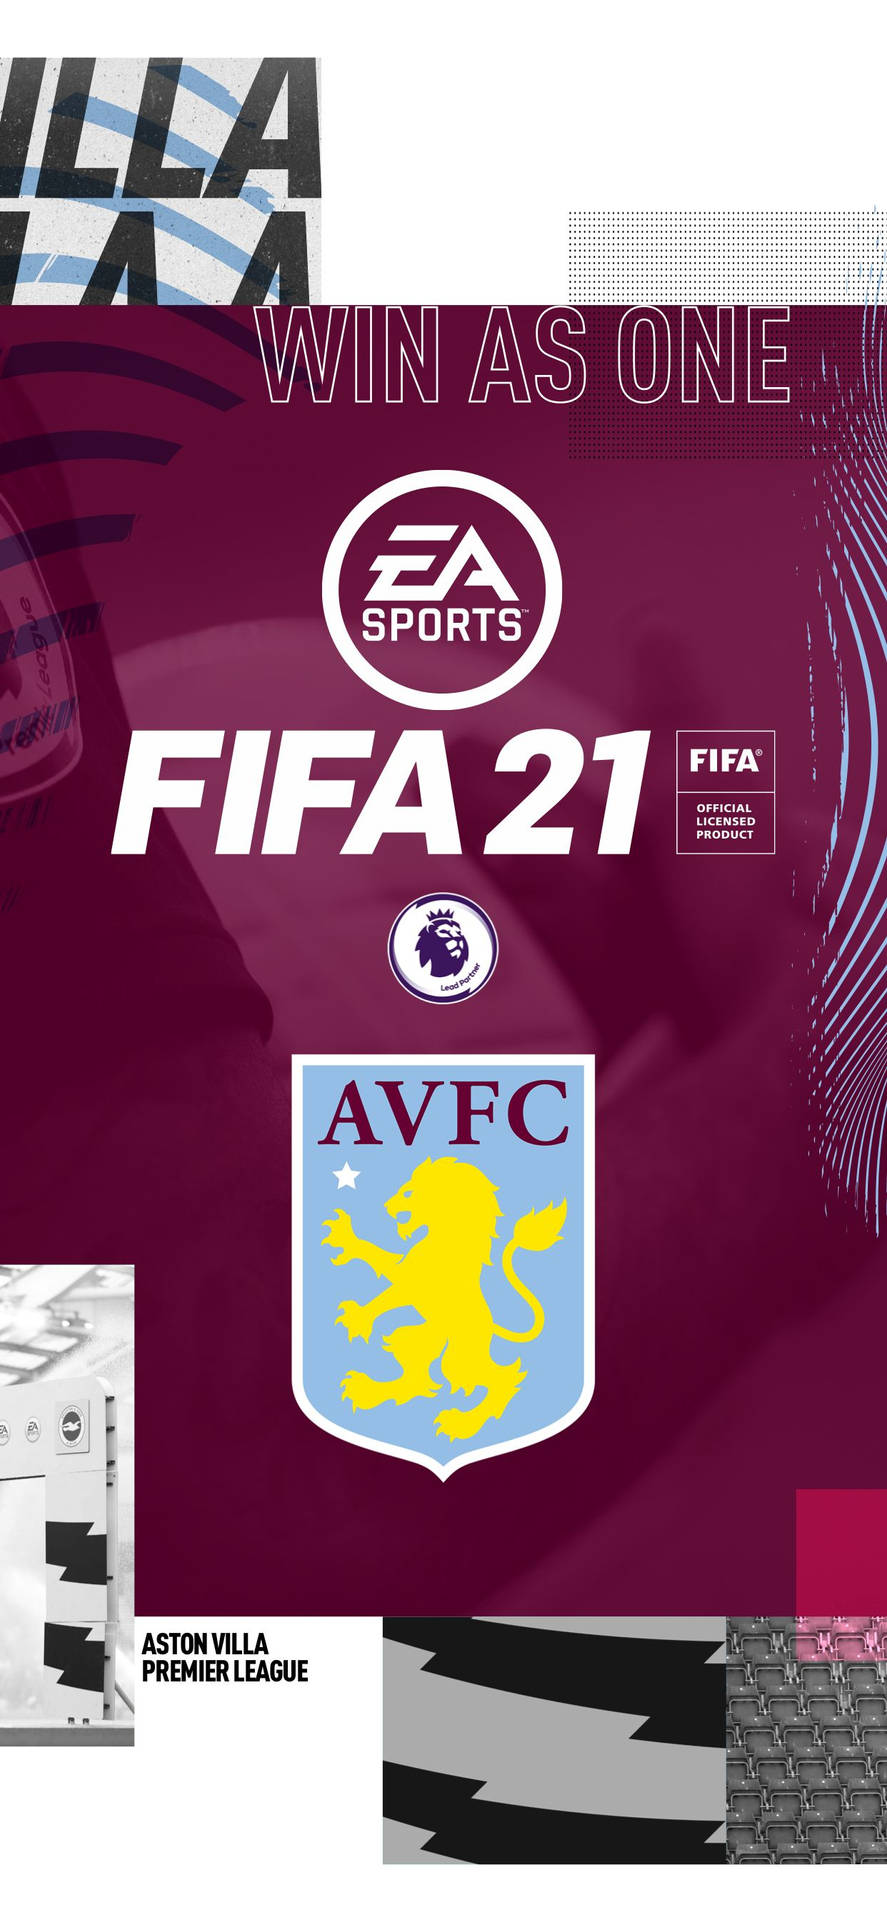 Aston Villa's Poster on FIFA 21 Wallpaper